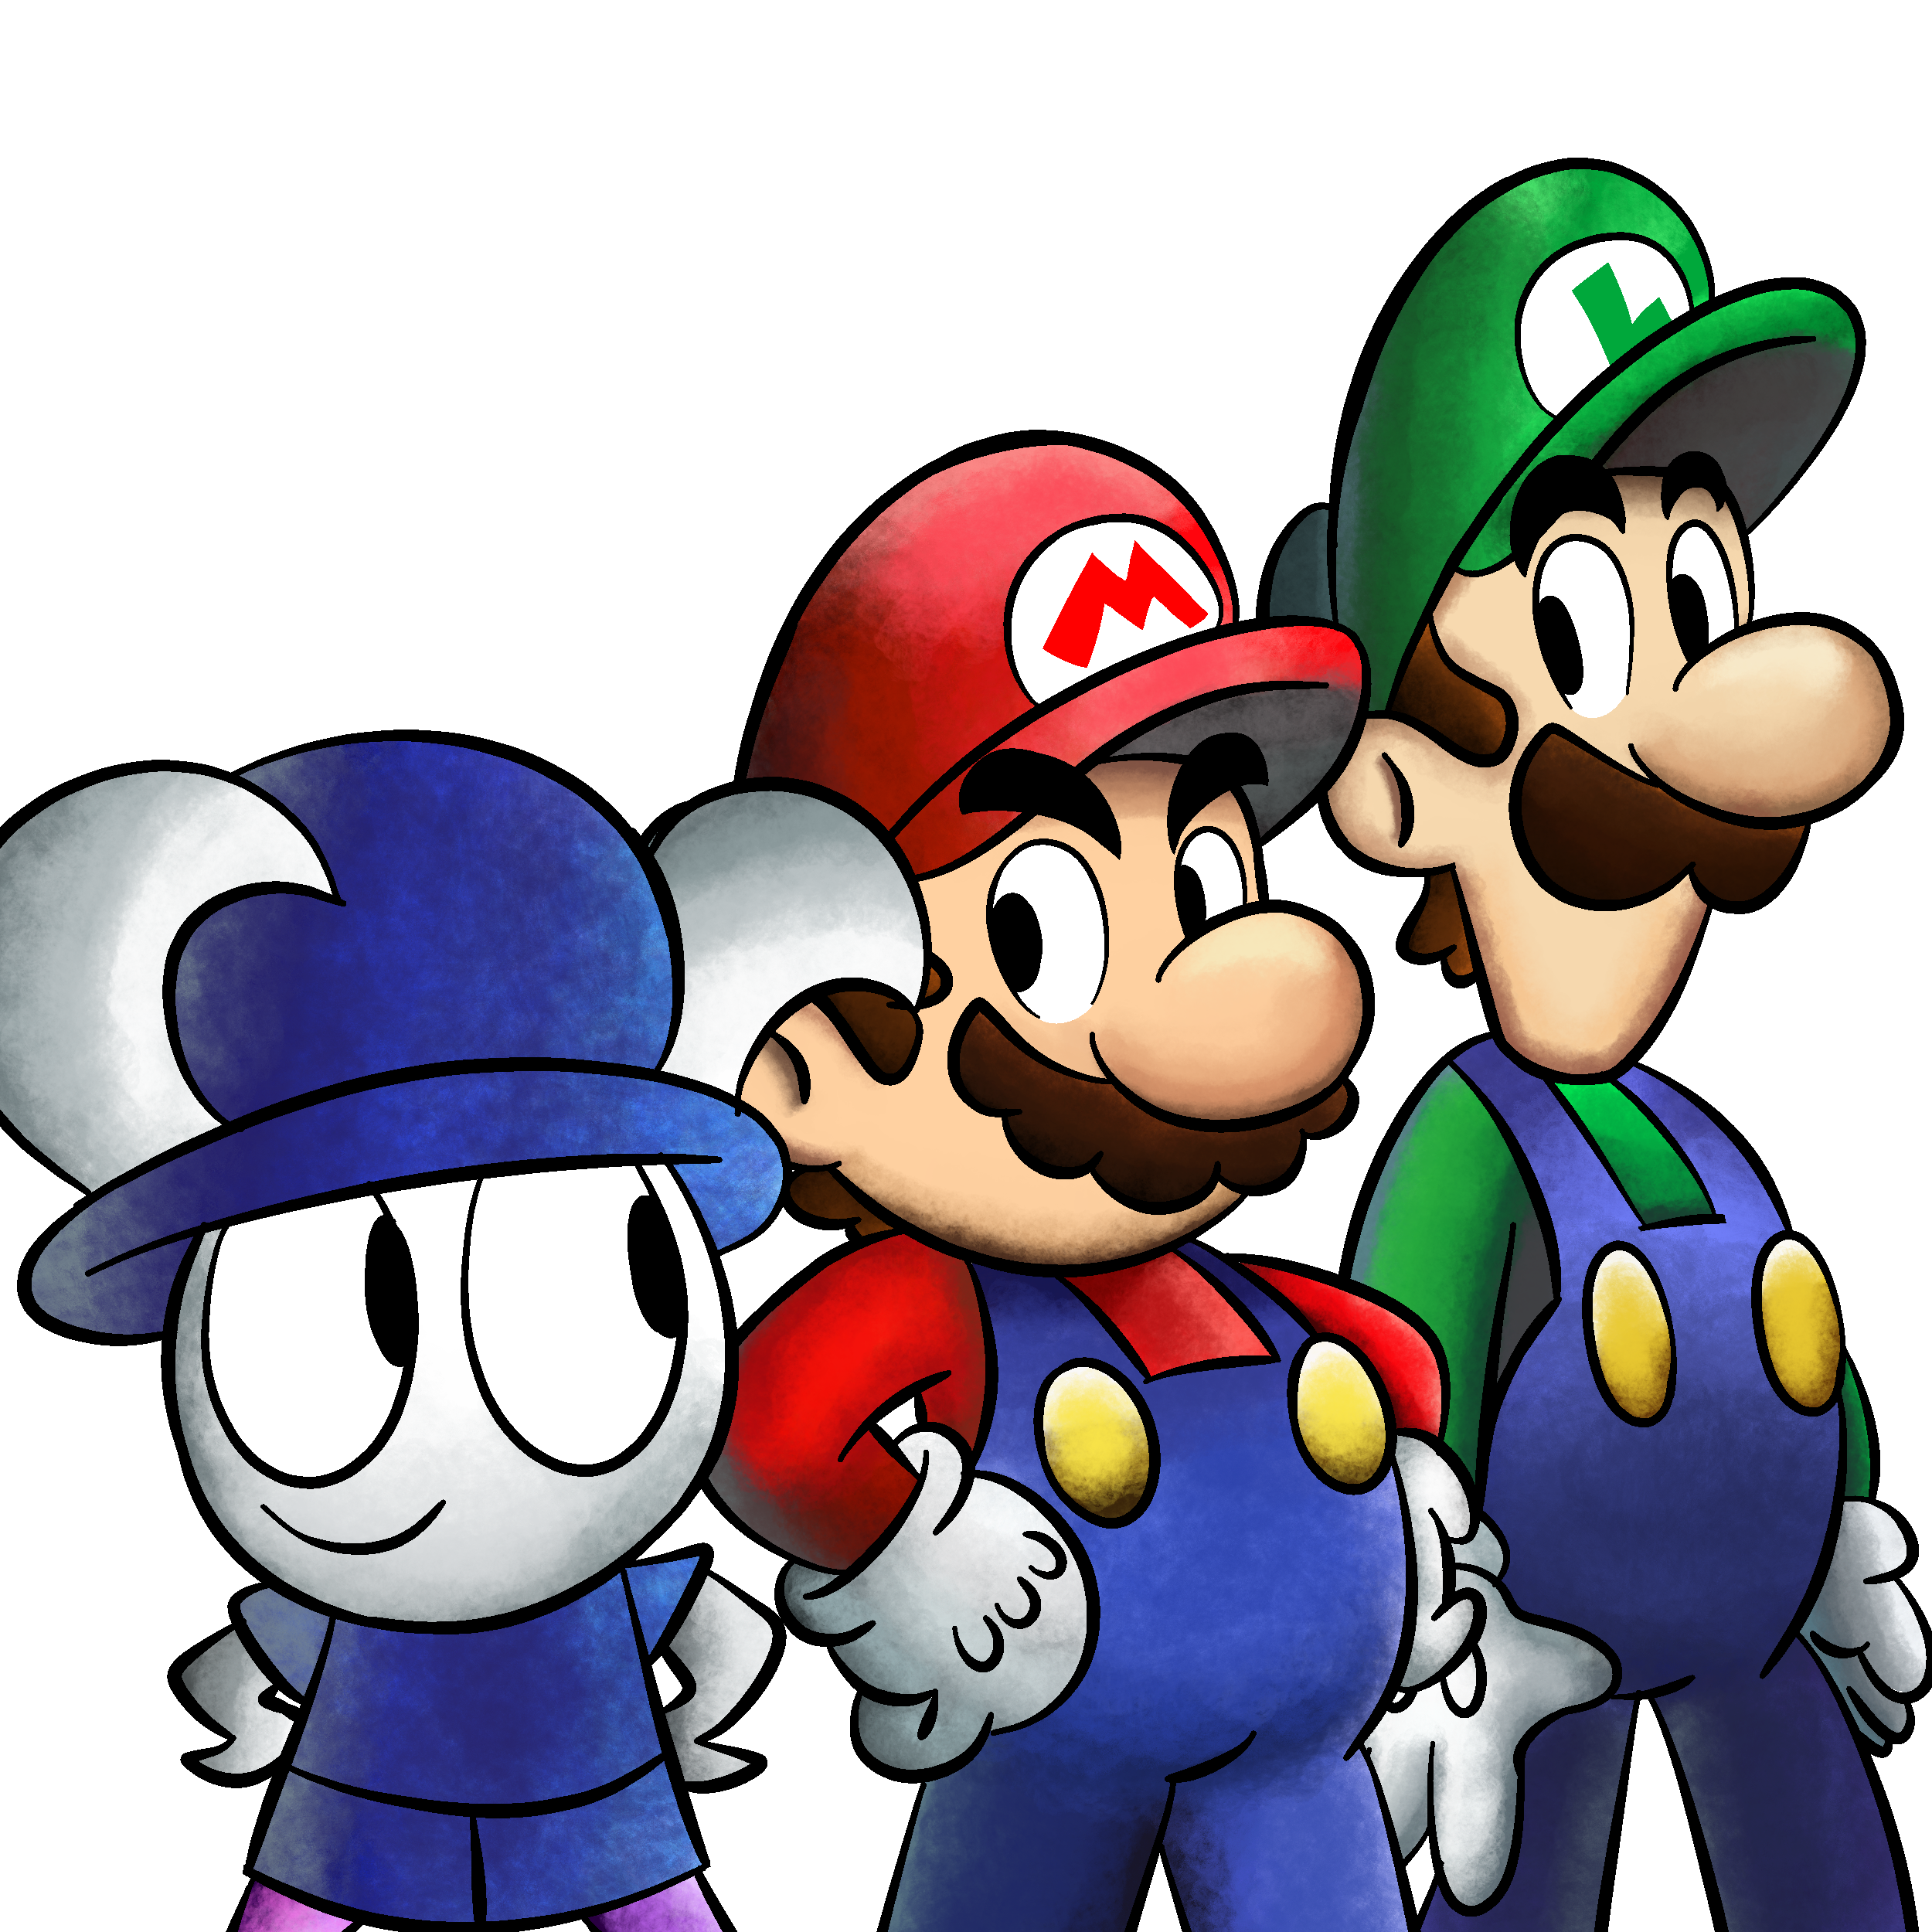 Mario + Luigi: A Better Tomorrow by BoredRabbit on DeviantArt